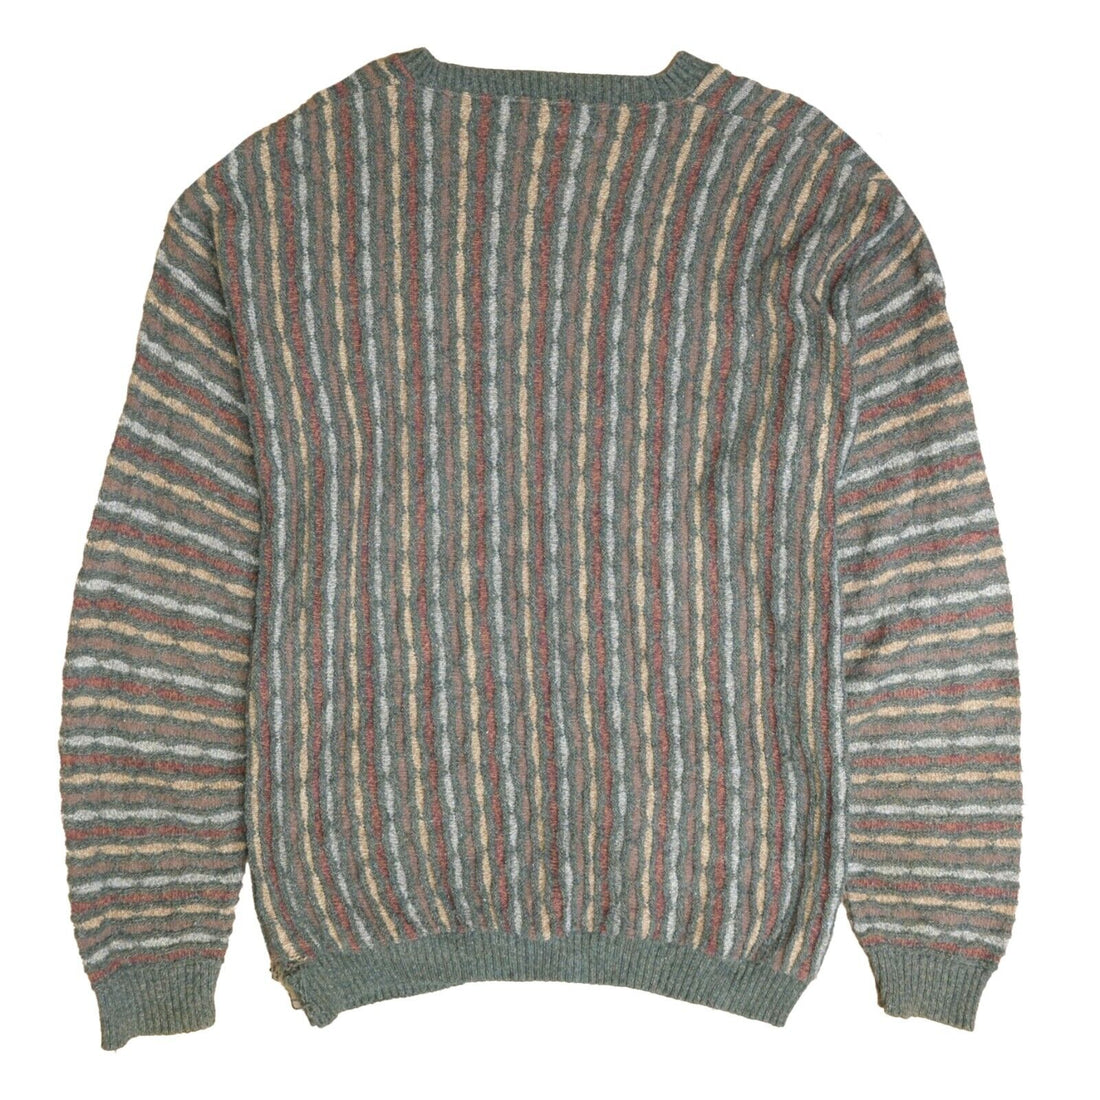 Vintage St John's Bay Knit Crewneck Sweater Size XL Tall Pullover